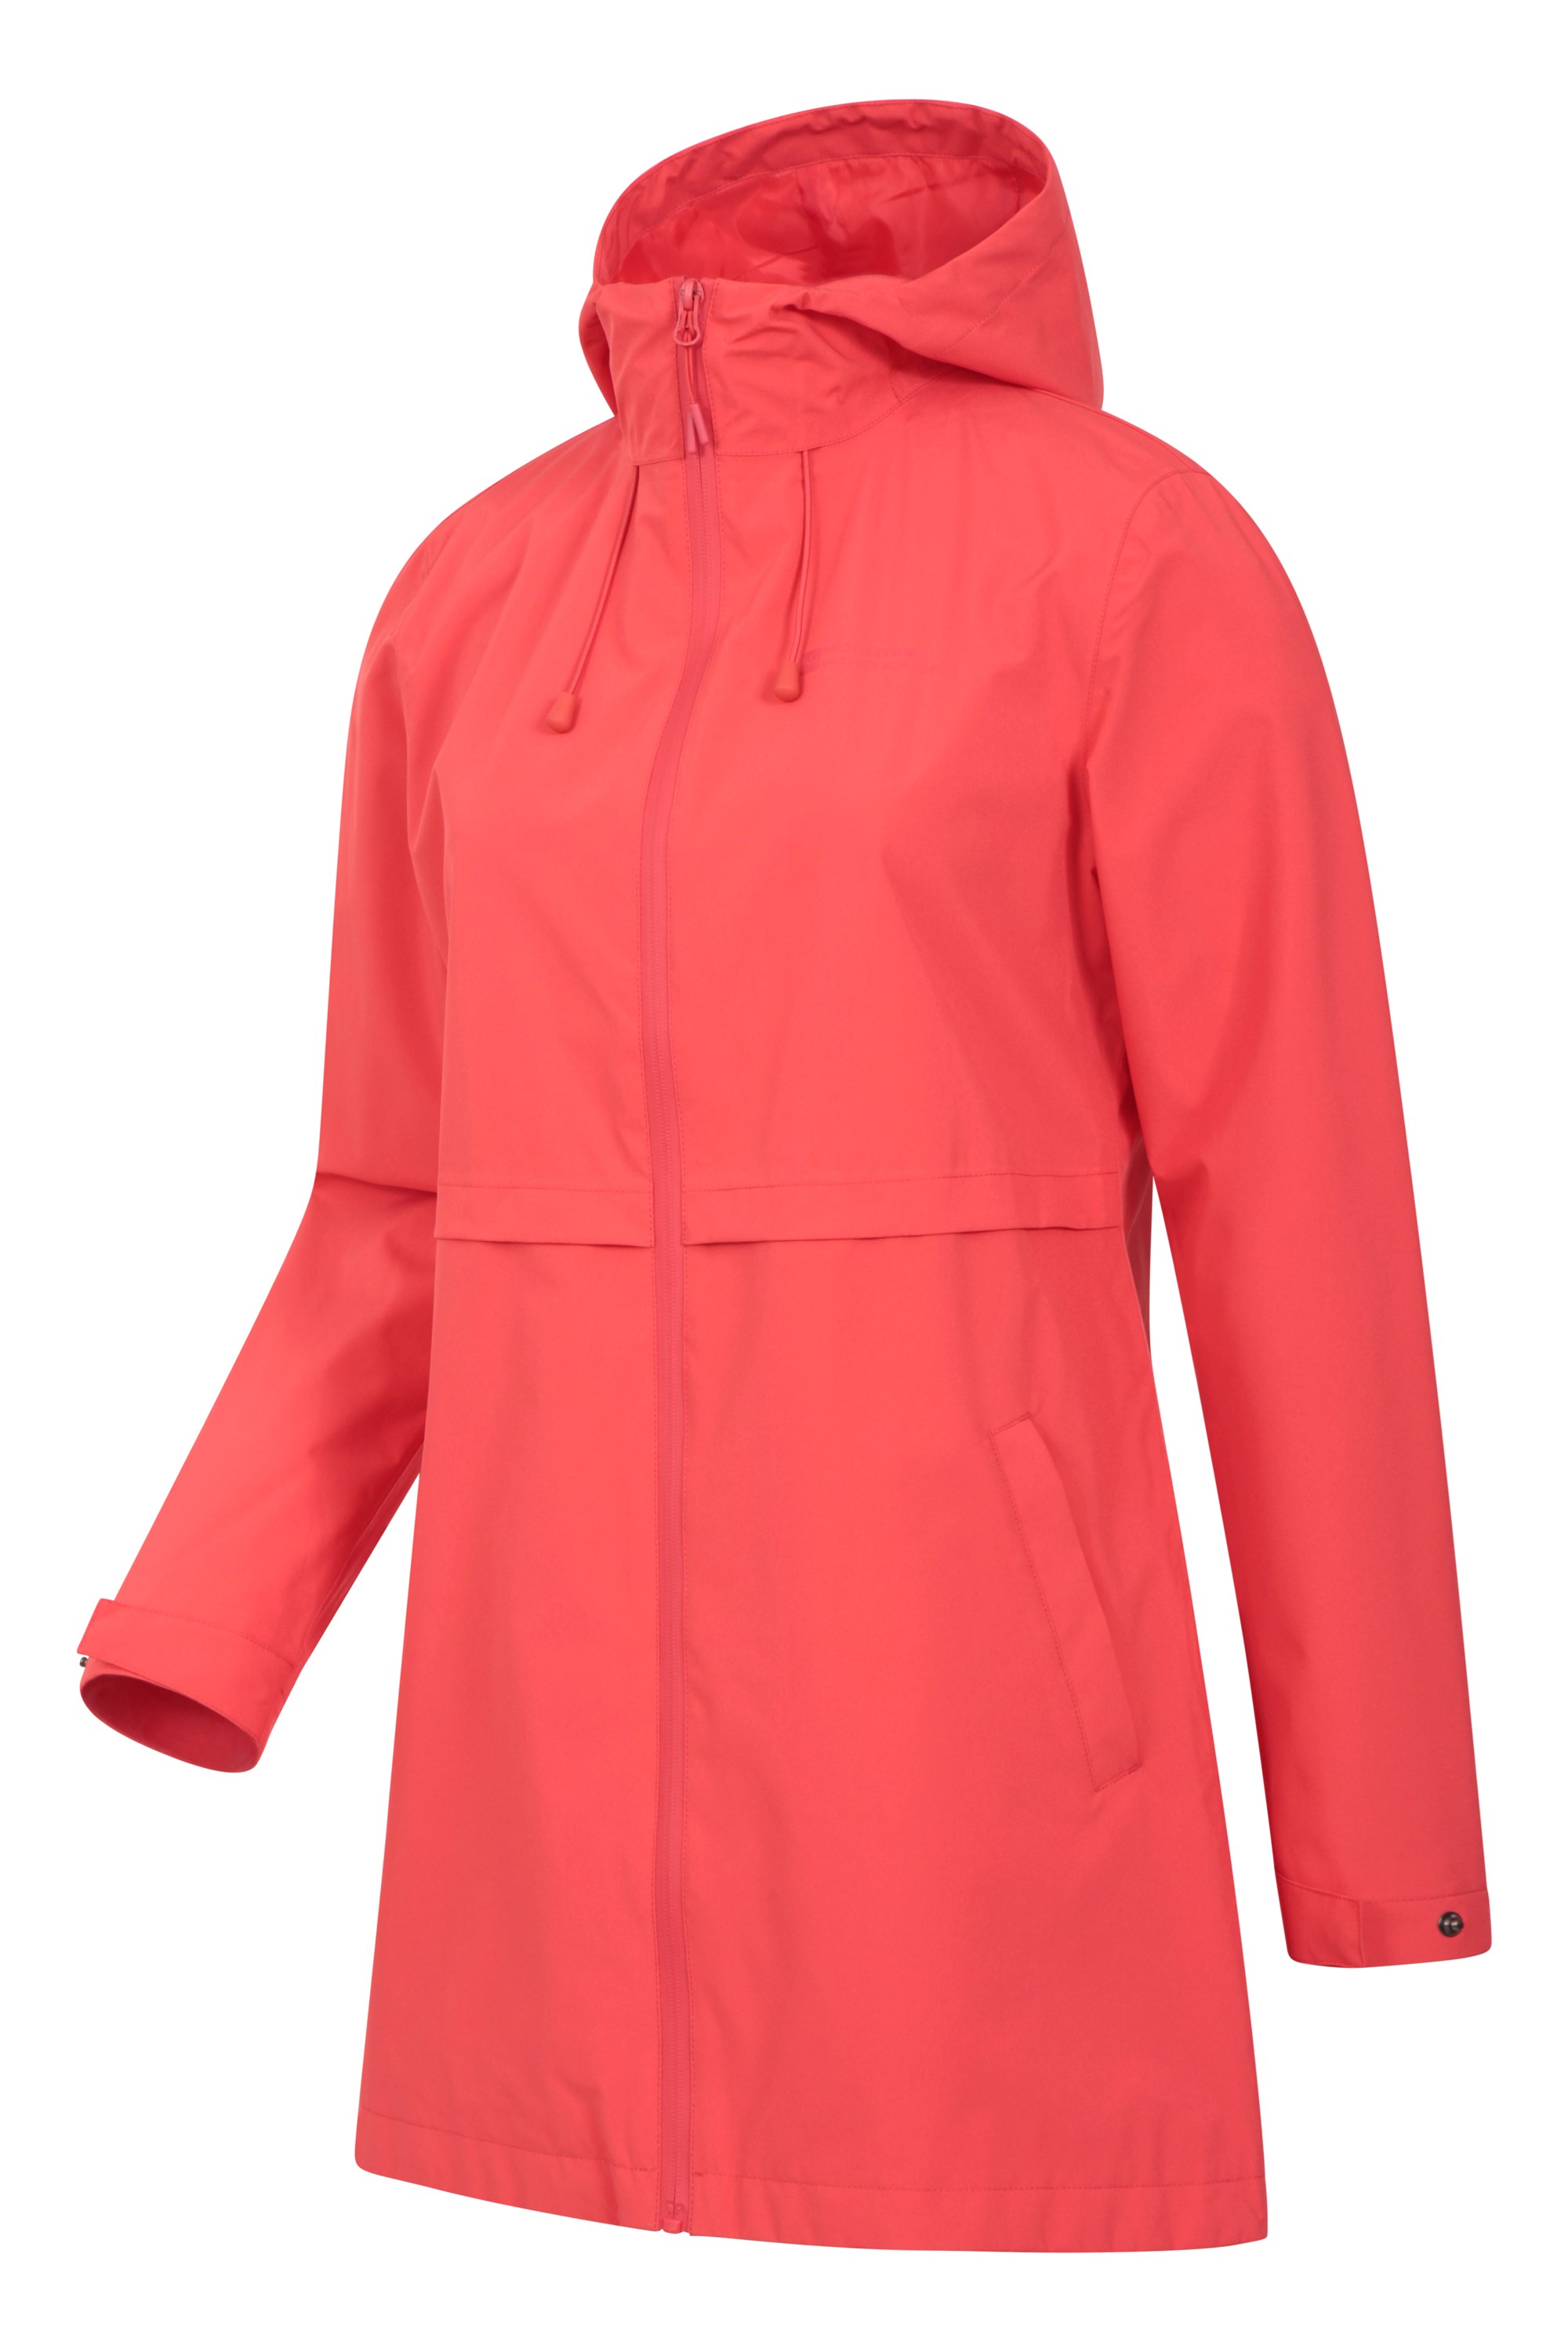 Mountain Warehouse Lake Womens Padded Waterproof Jacket Breathable Taped Seams Front Pockets